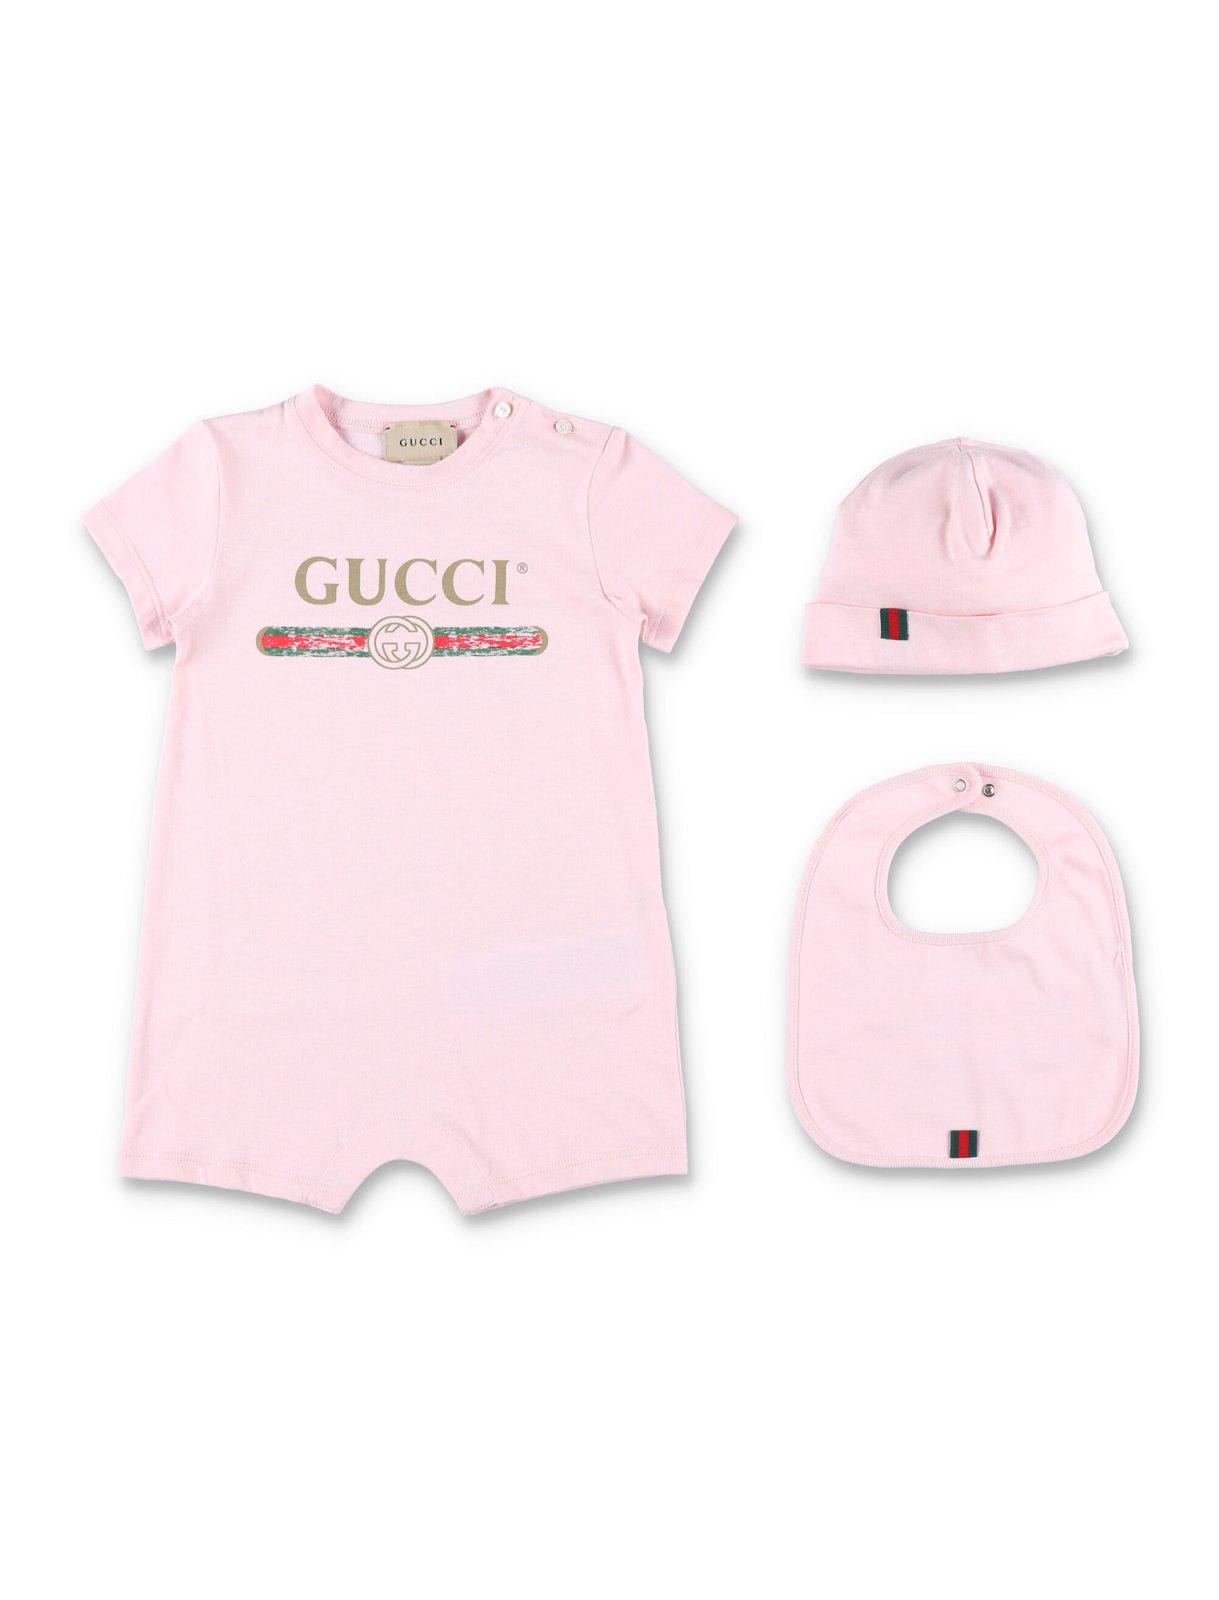 Gucci Logo Printed Crewneck Babygrow Set